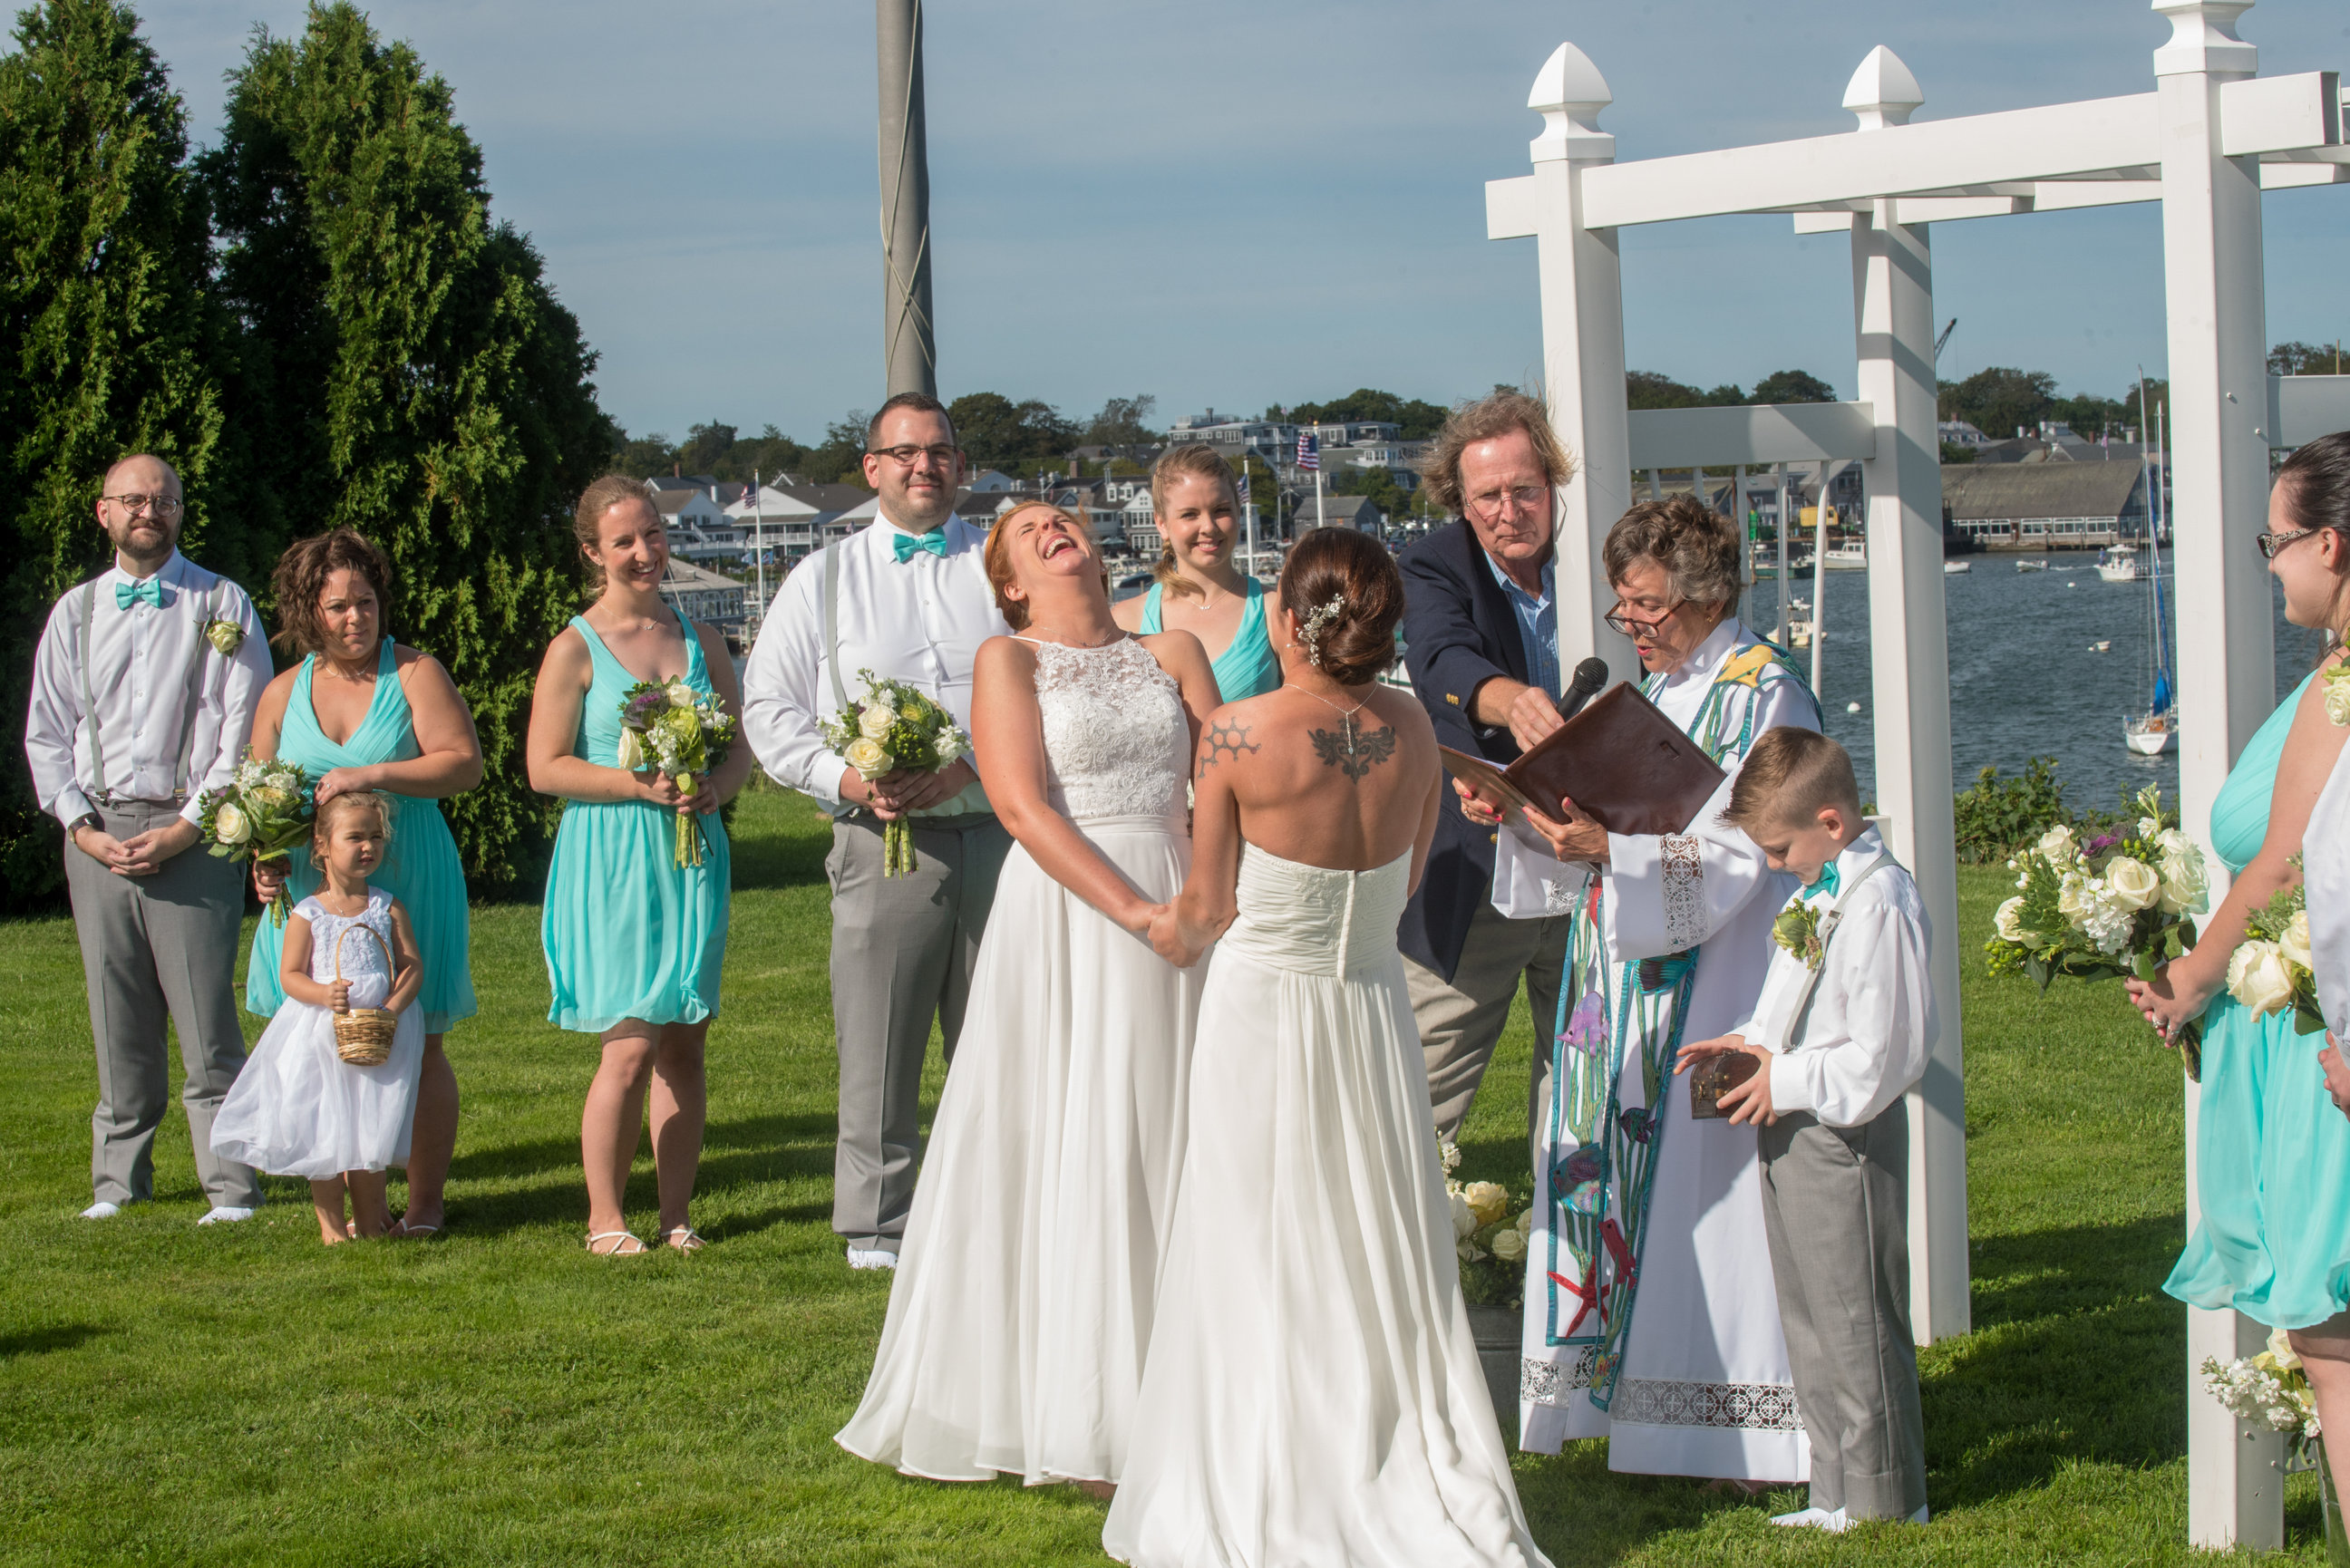 New Hampshire Micro weddings, Tiny Weddings, Pop-Up Weddings